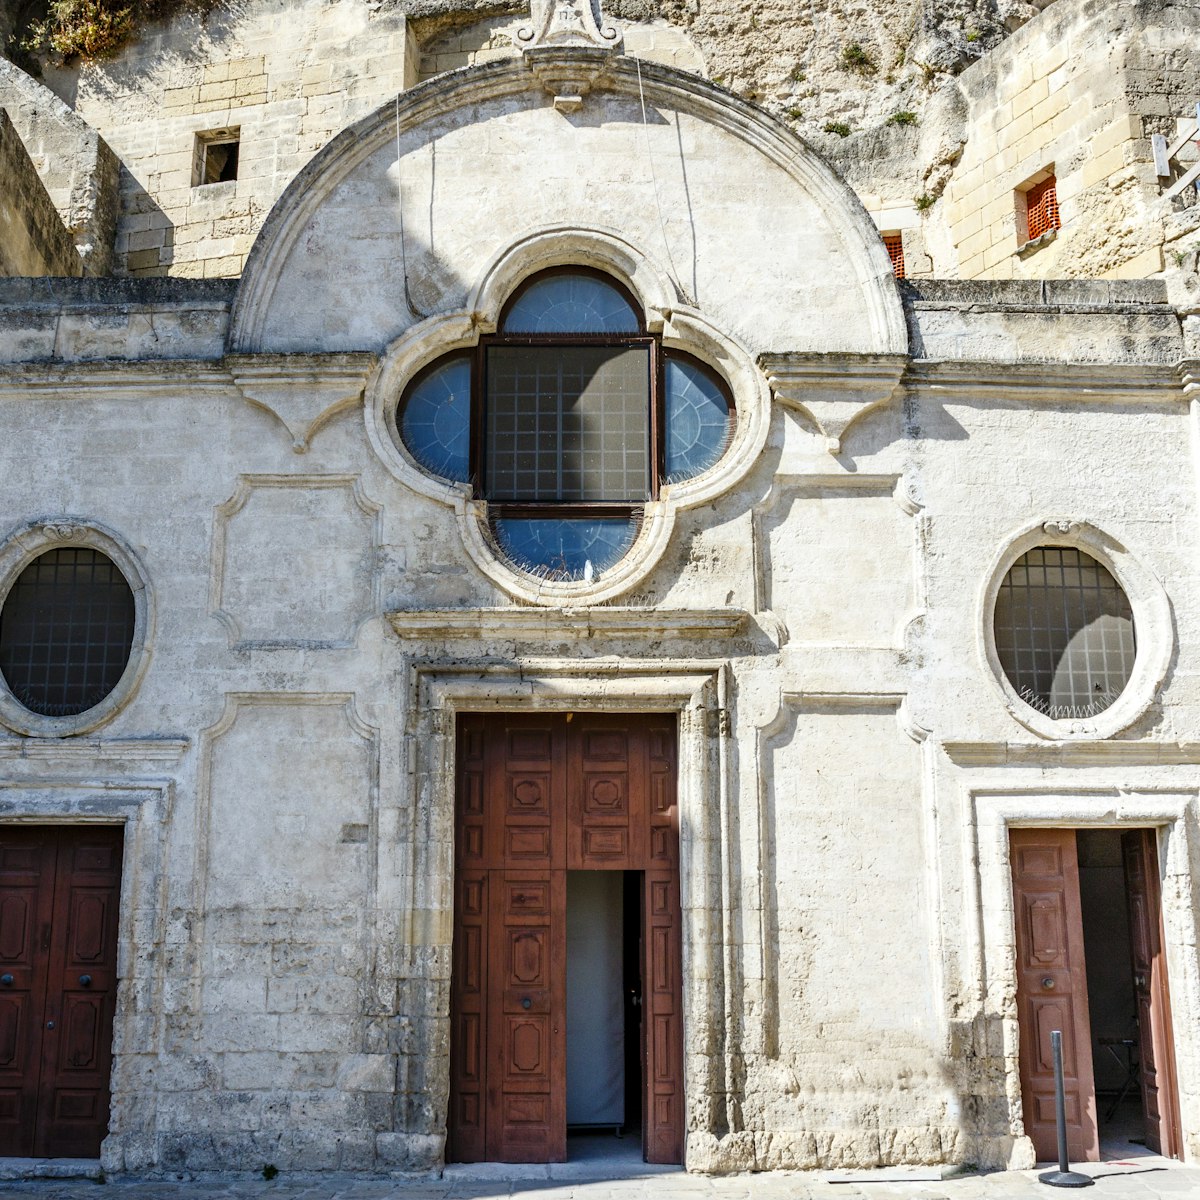 Exterior of the Chiesa San Pietro Barisano church in Matera, Italy.